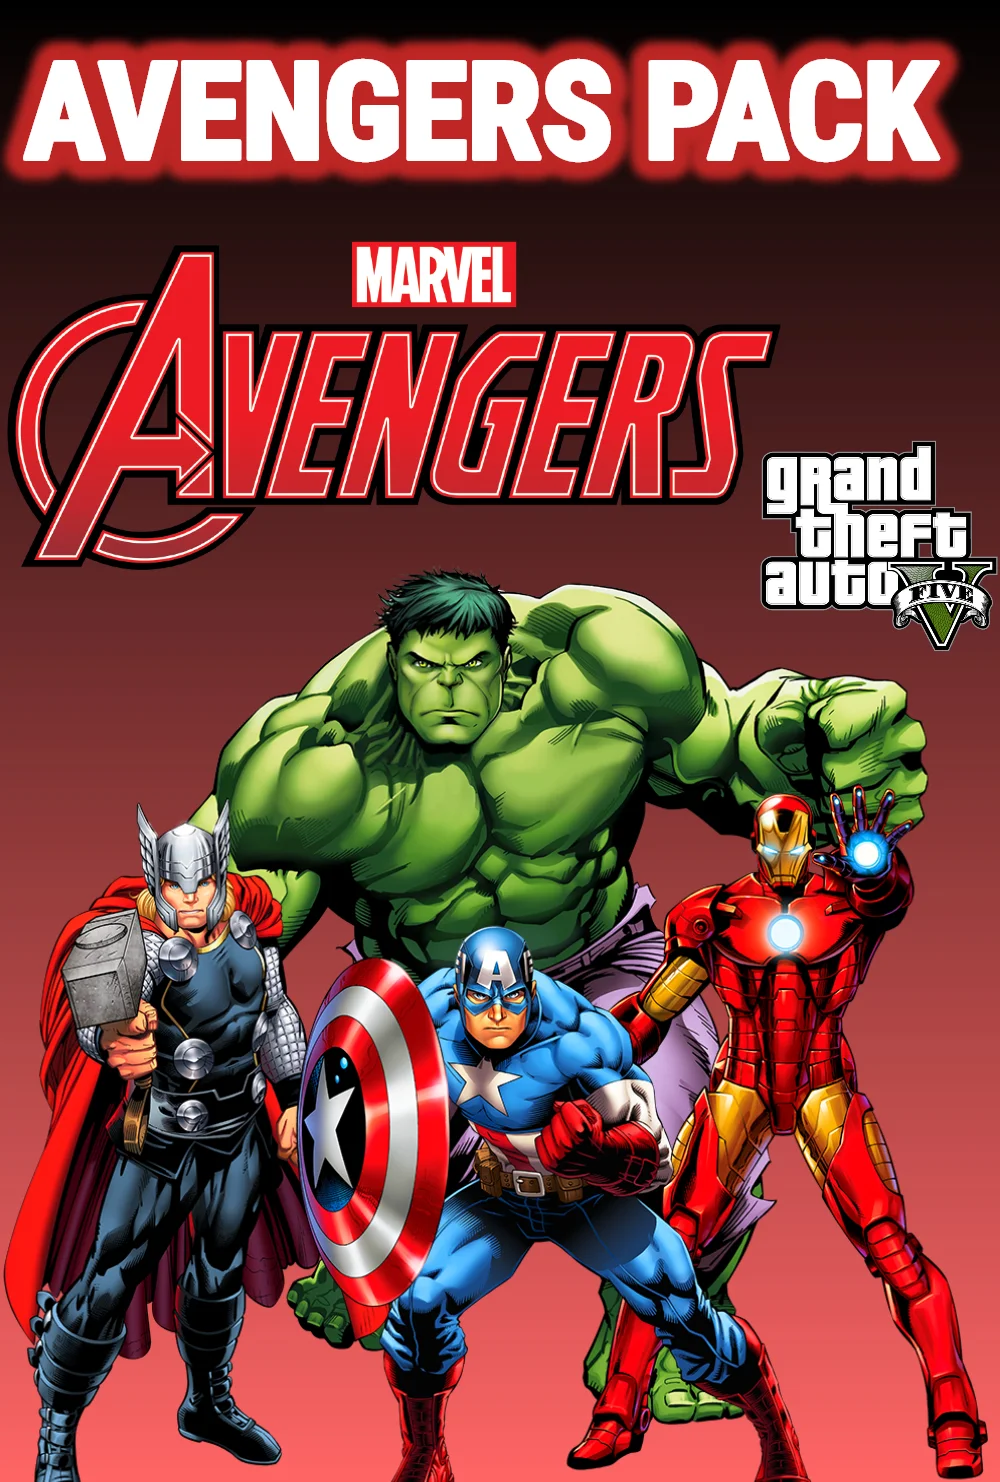 GTA 5 Free Avengers Pack - All Super Heroes Mod in GTA V (Addon Pack)